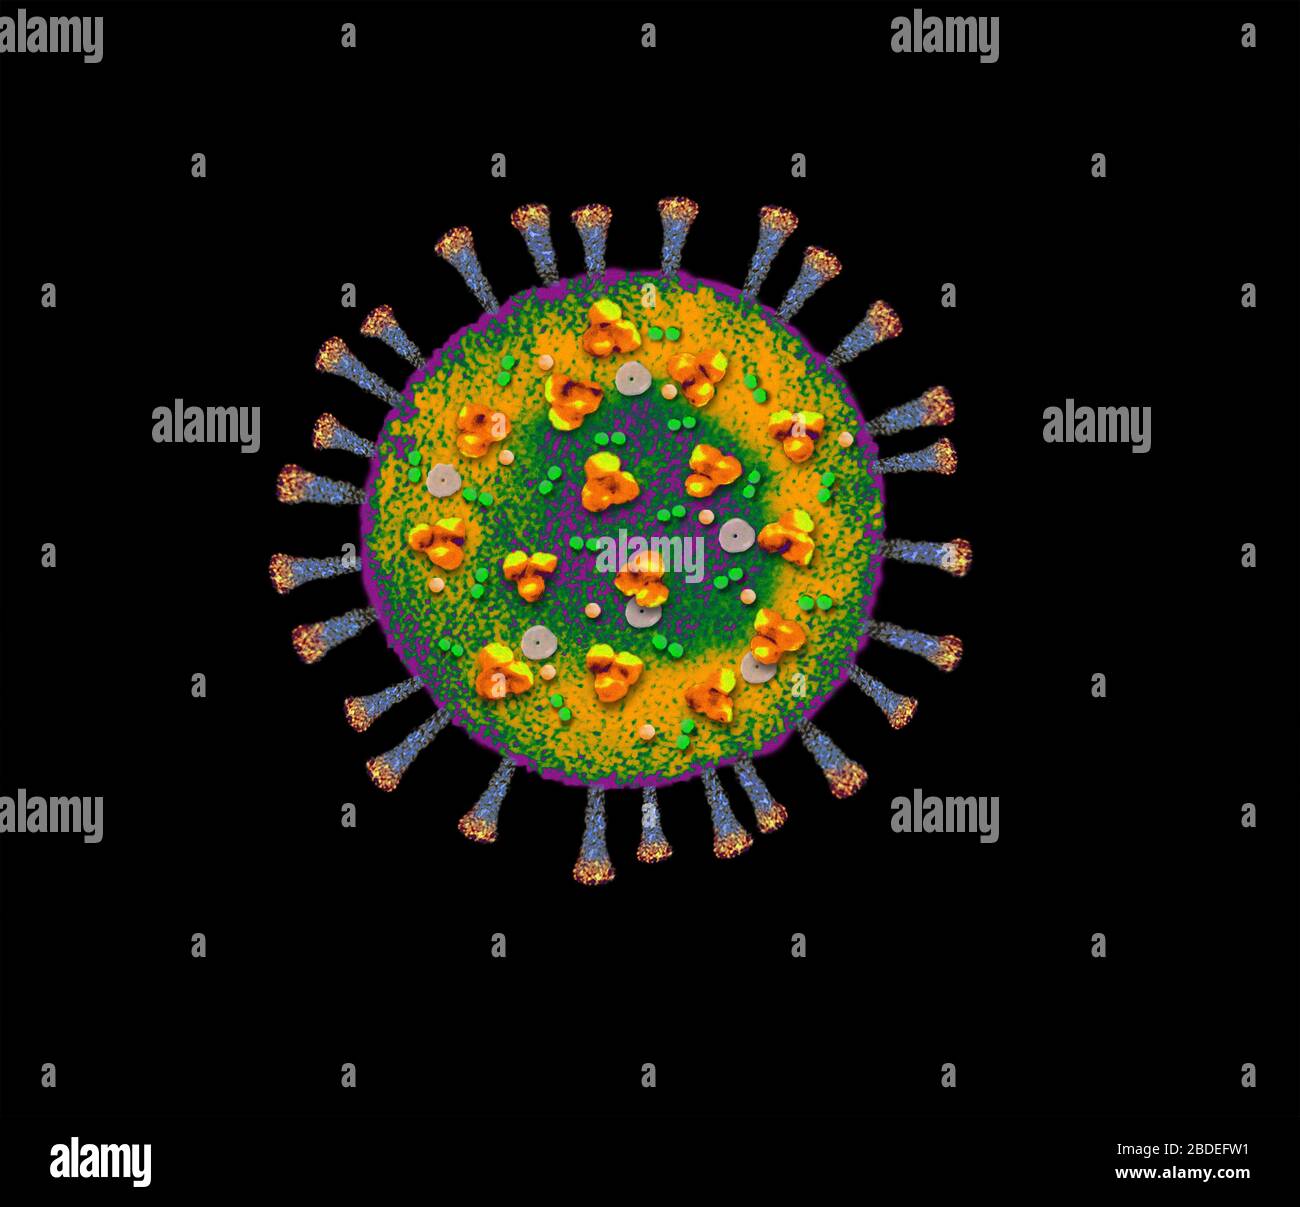 Digitally generated image ofÂ Coronavirus Stock Photo